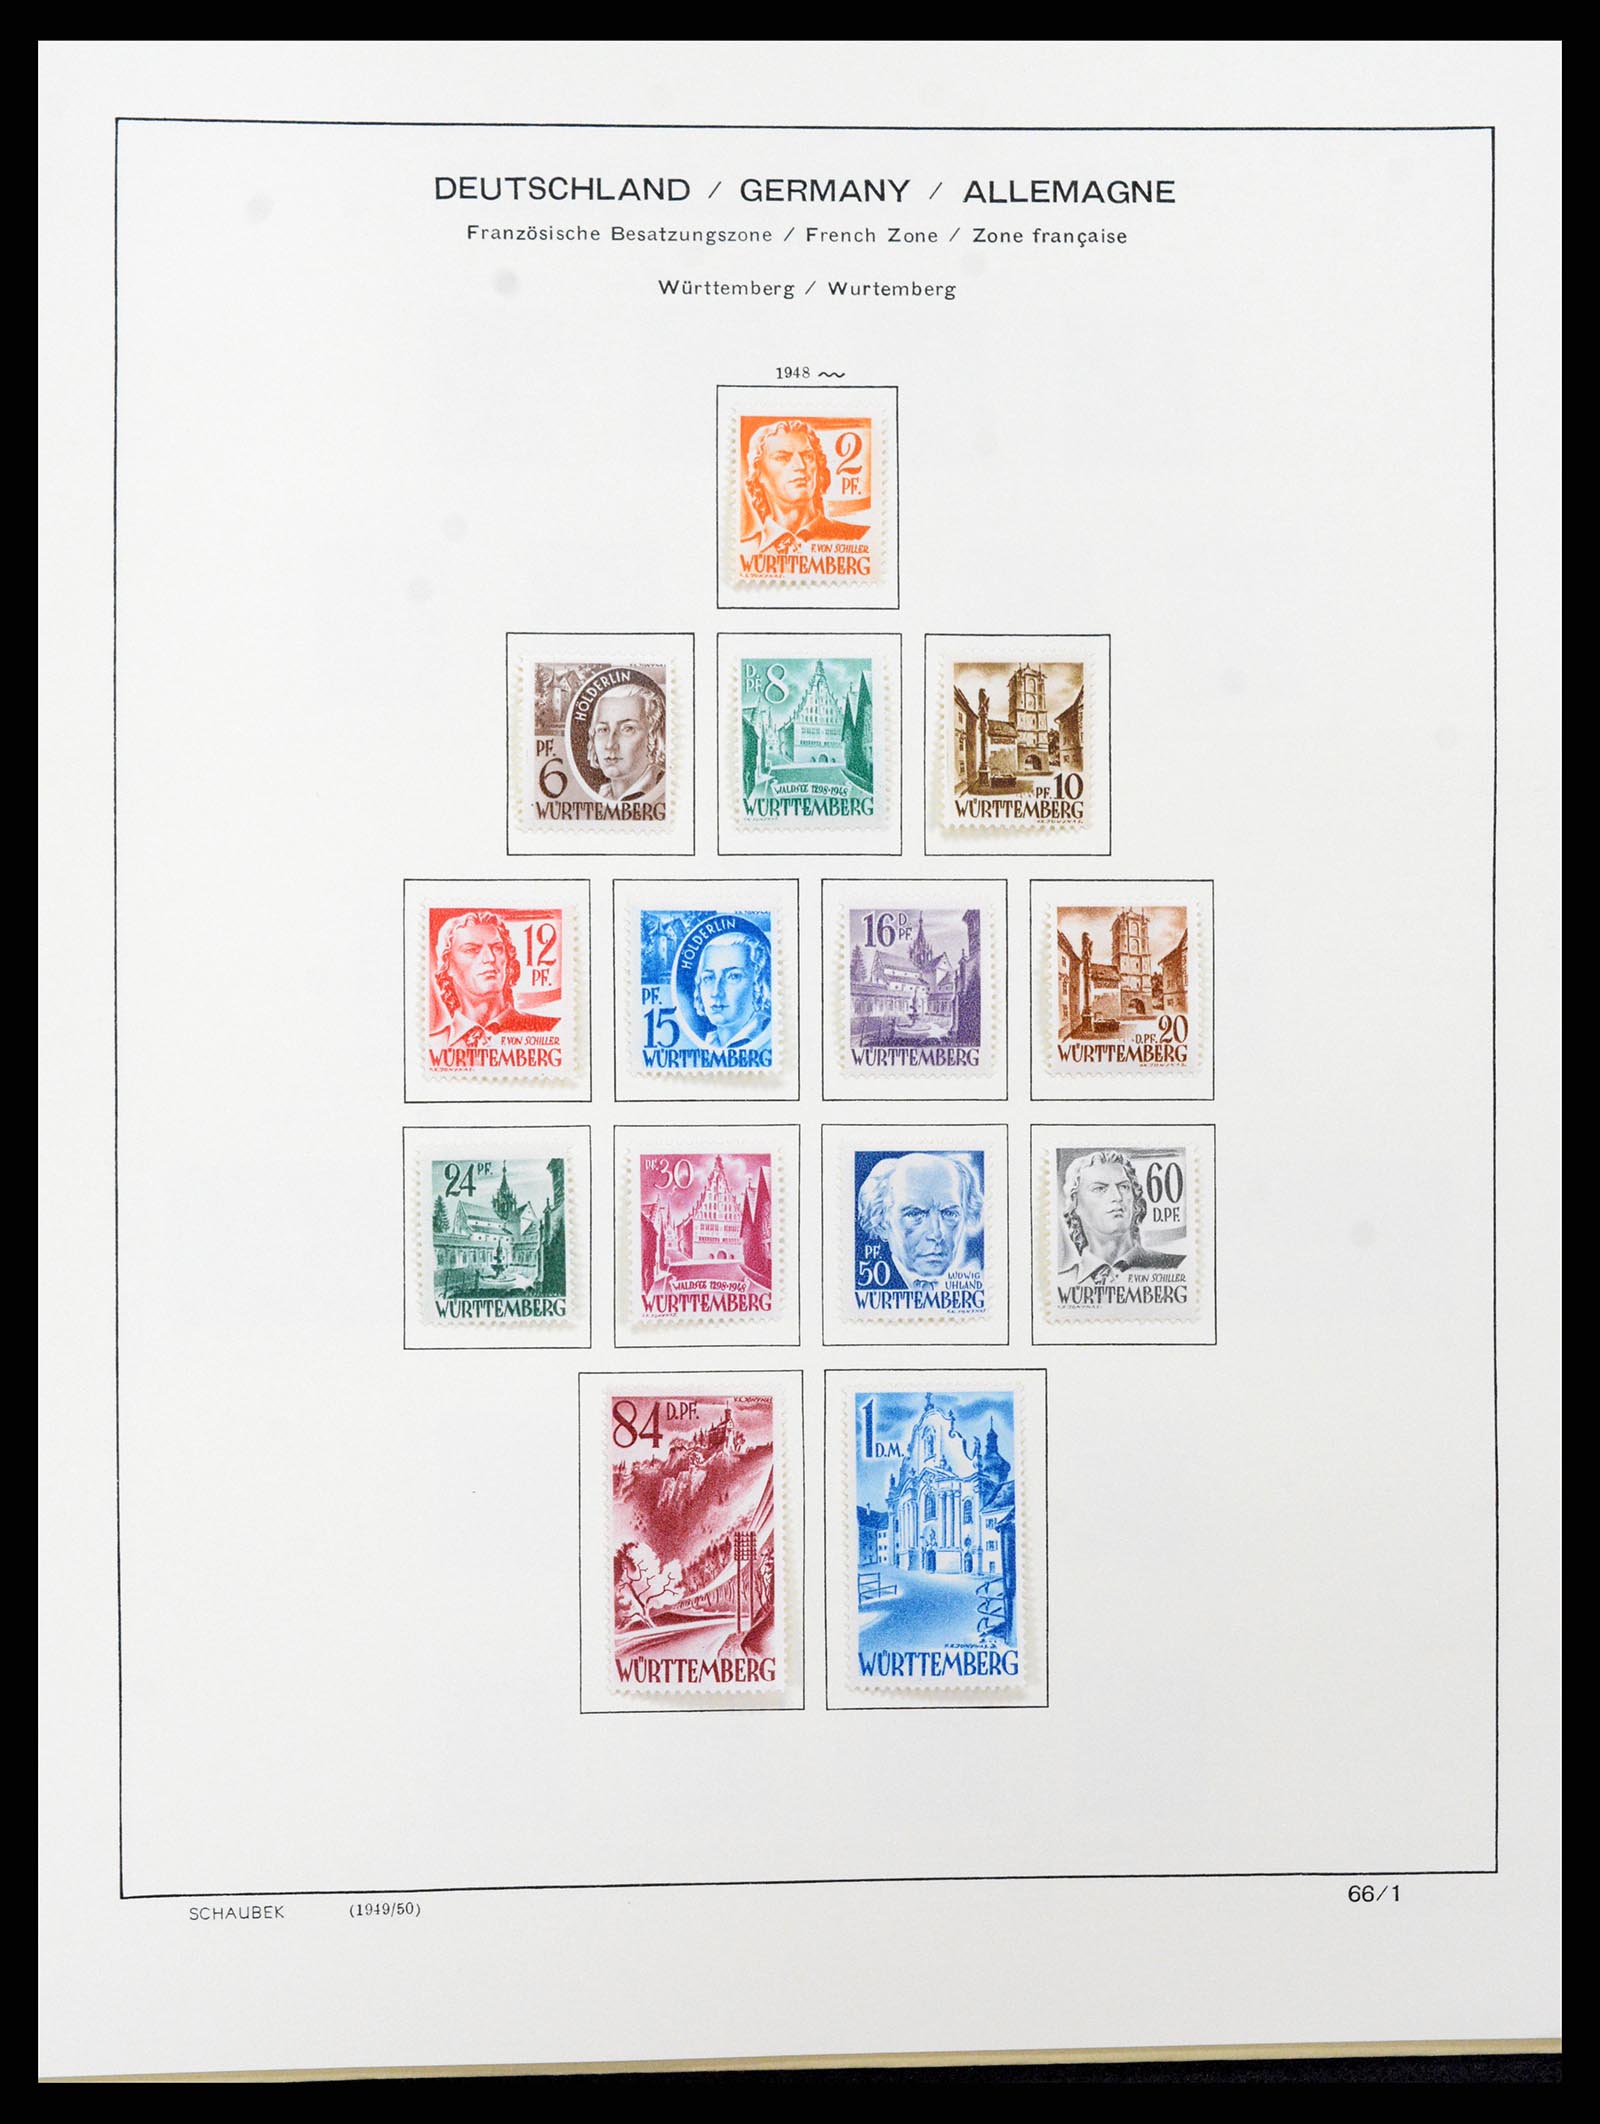 37645 069 - Stamp collection 37645 German Zones 1945-1949.